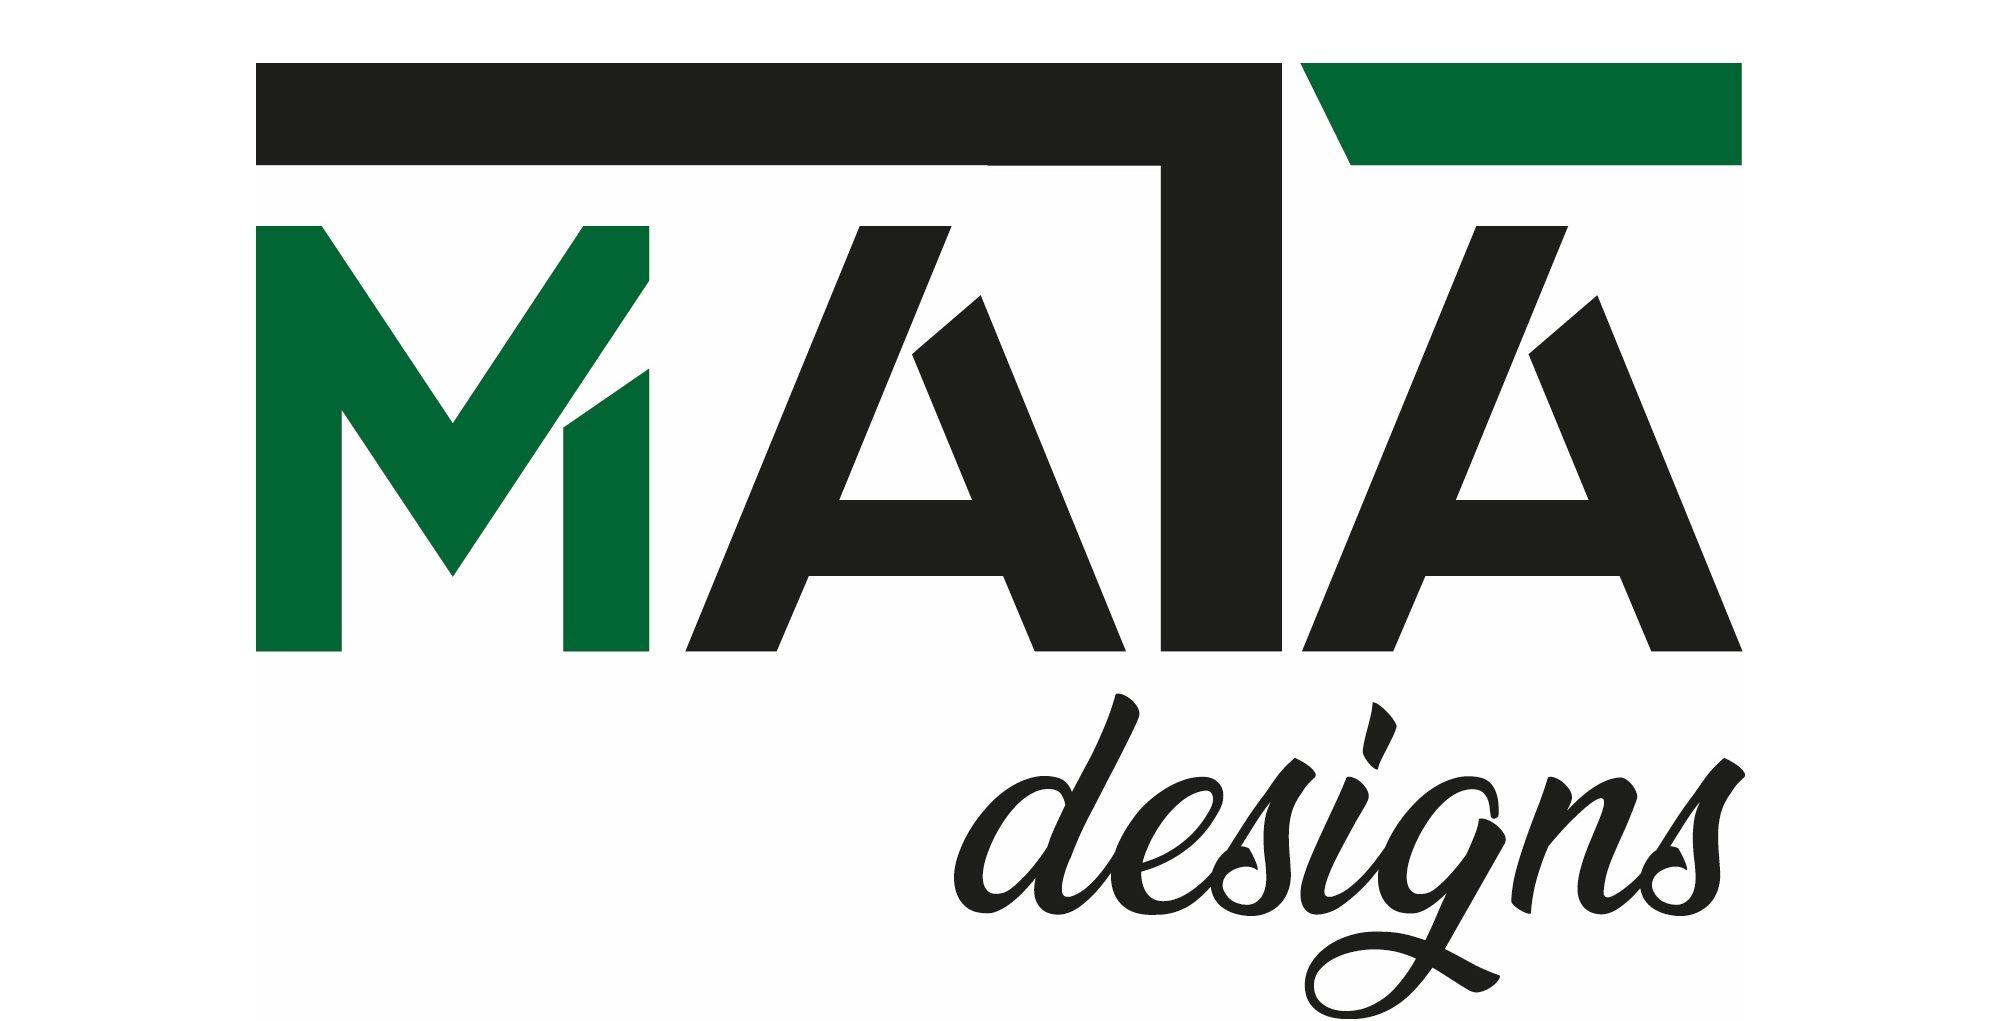 Mata designs